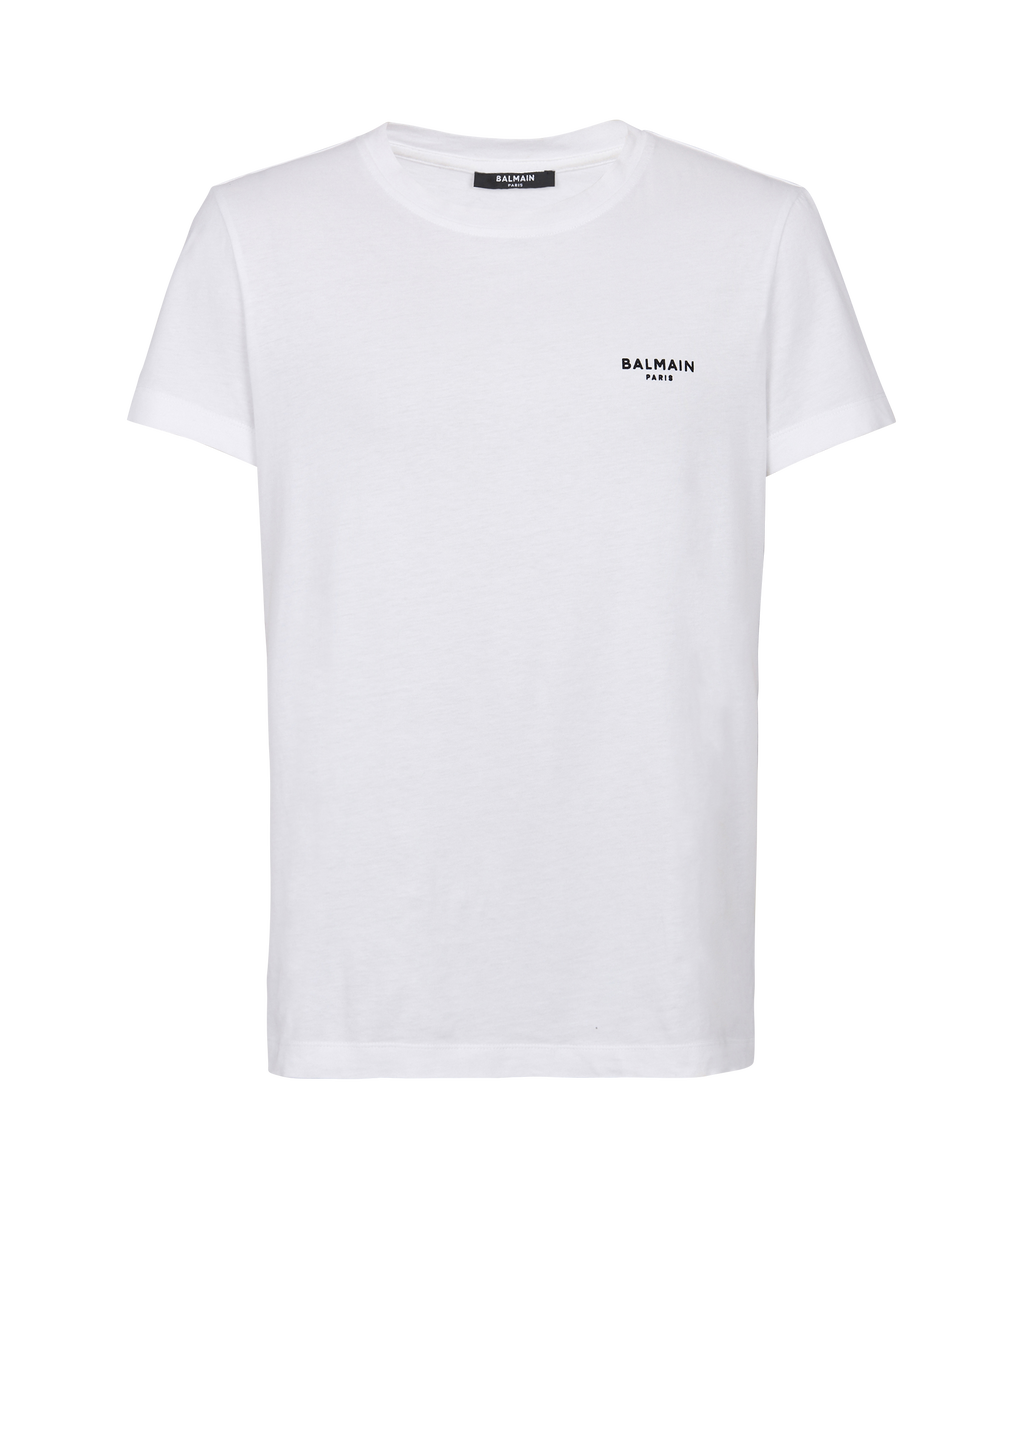 T-shirt en coton floqué petit logo Balmain Paris, blanc, hi-res